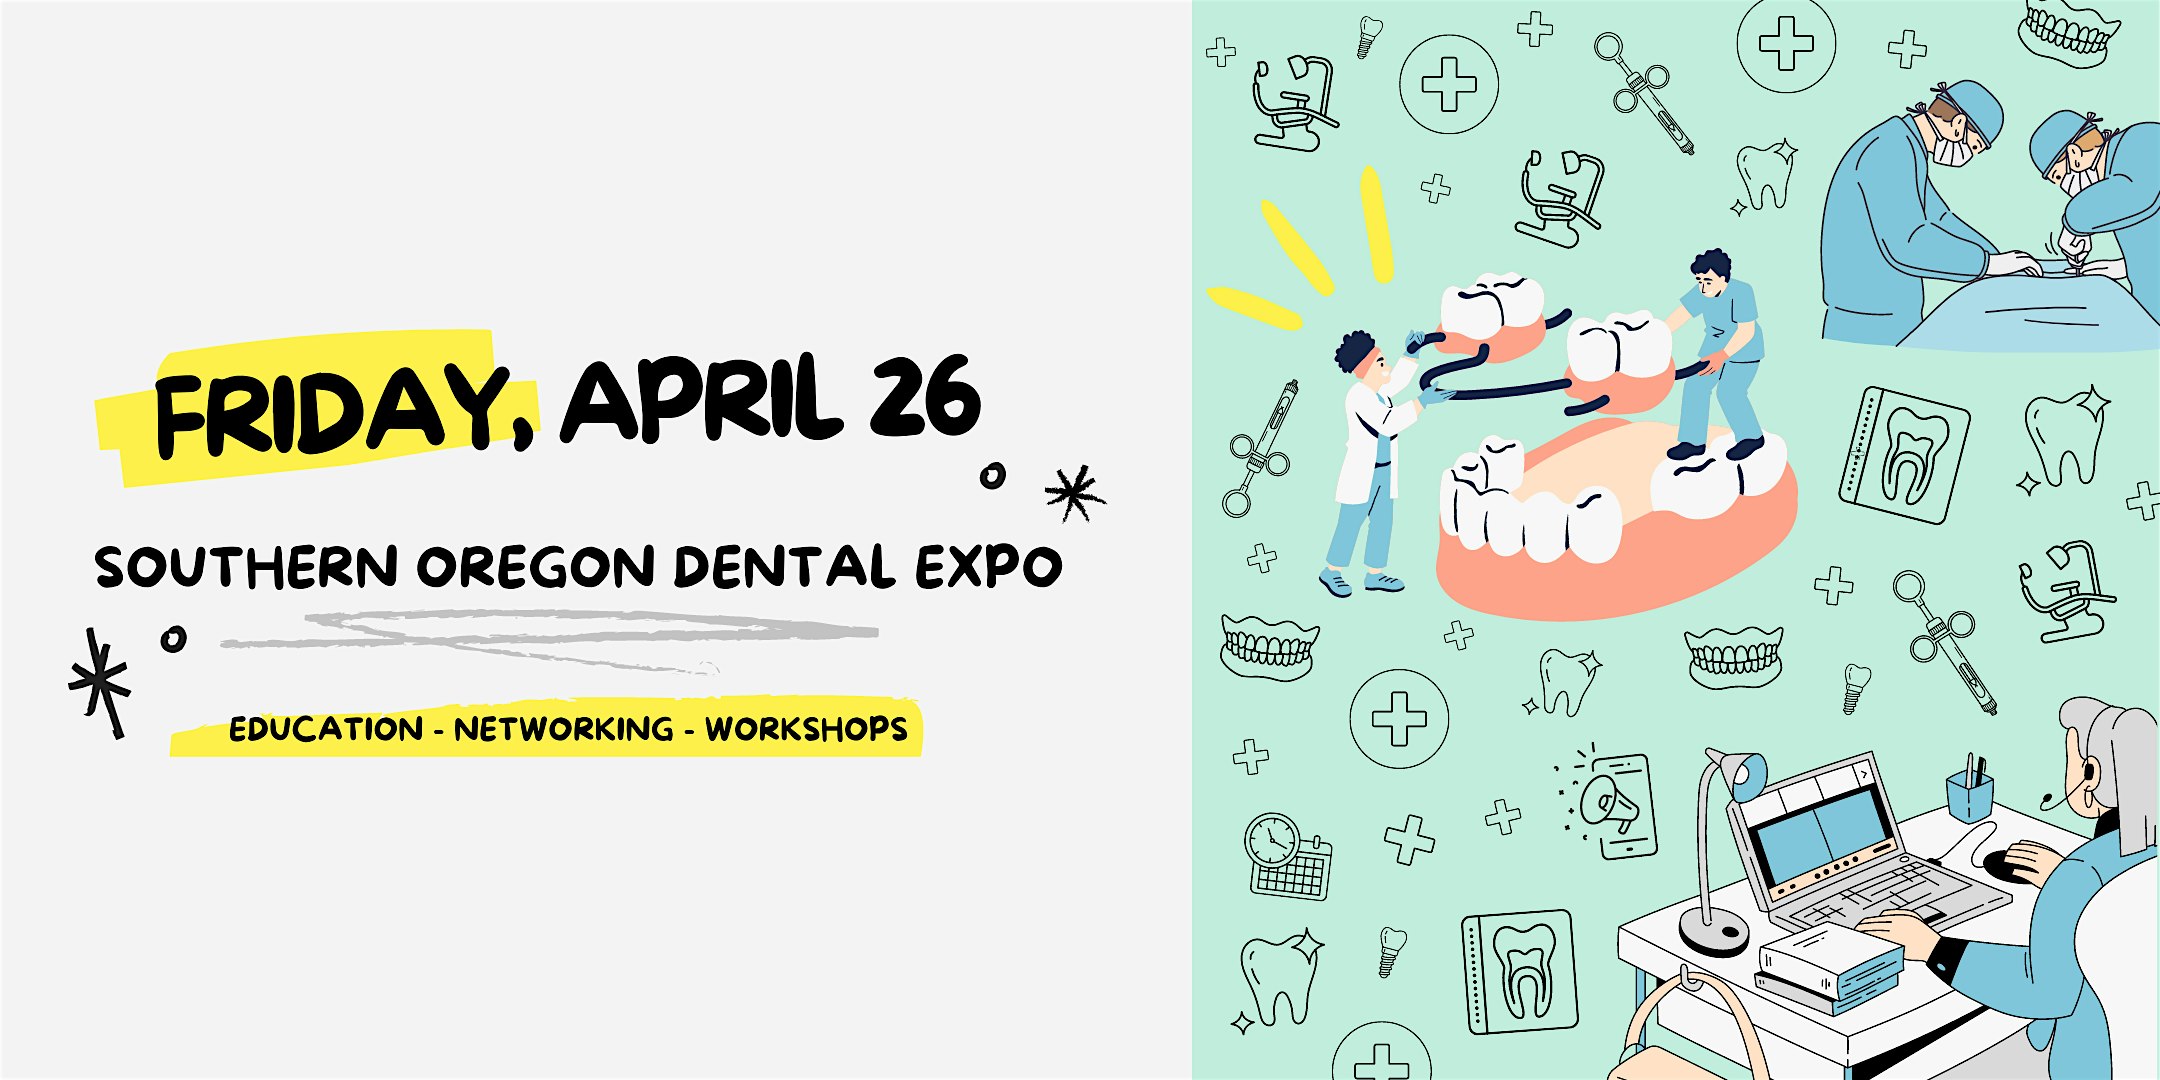 Southern Oregon Dental Expo